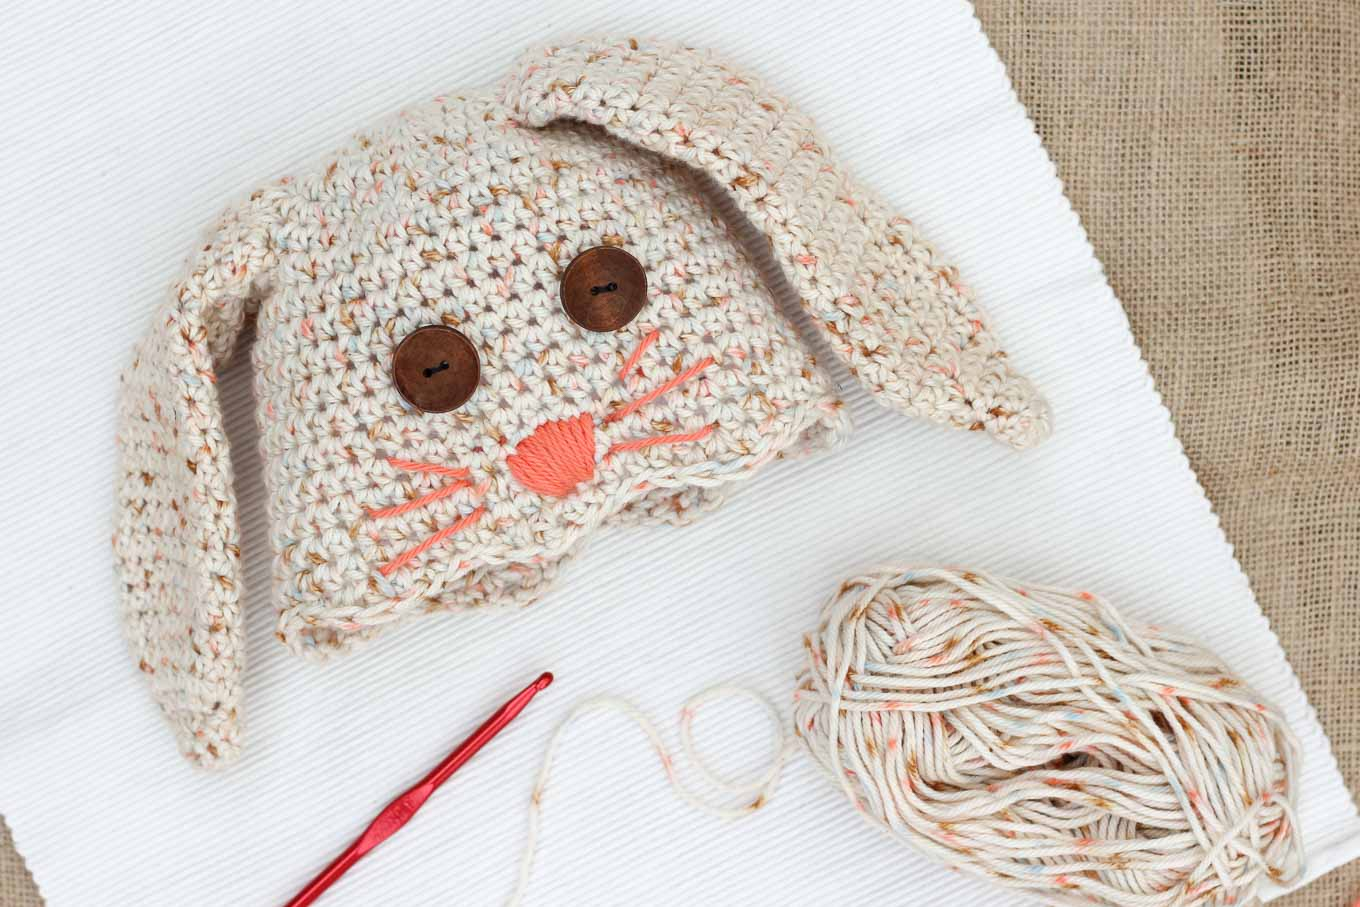 Baby Bunny Crochet Pattern Free Crochet Bunny Hat Pattern Newborn Toddler Make Do Crew